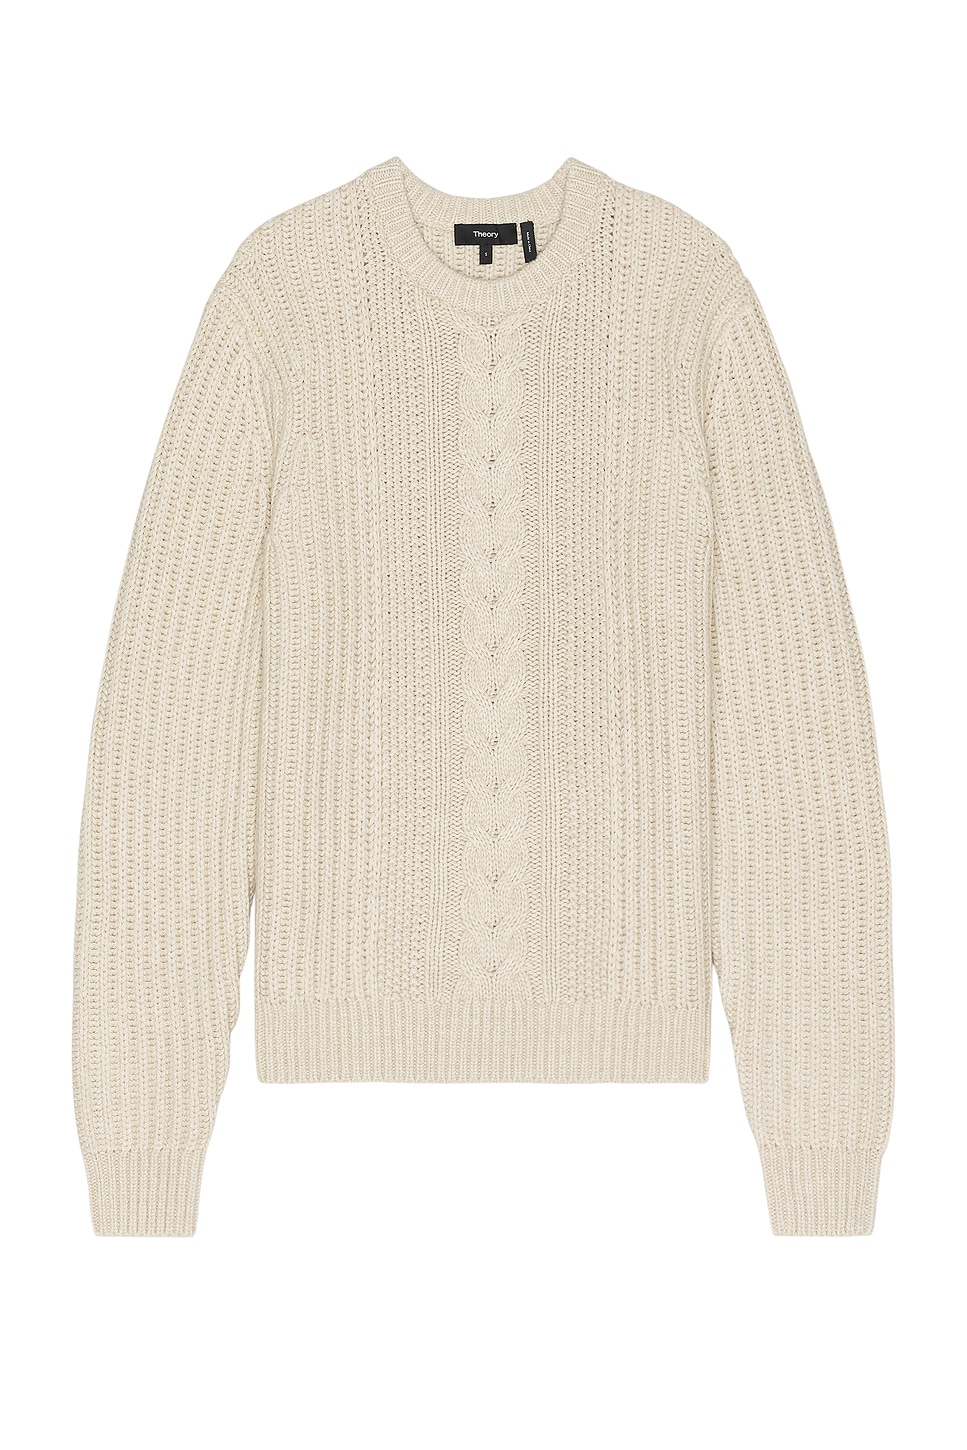 Image 1 of Theory Vilare Dane Wool Sweater in Light Beige Melange